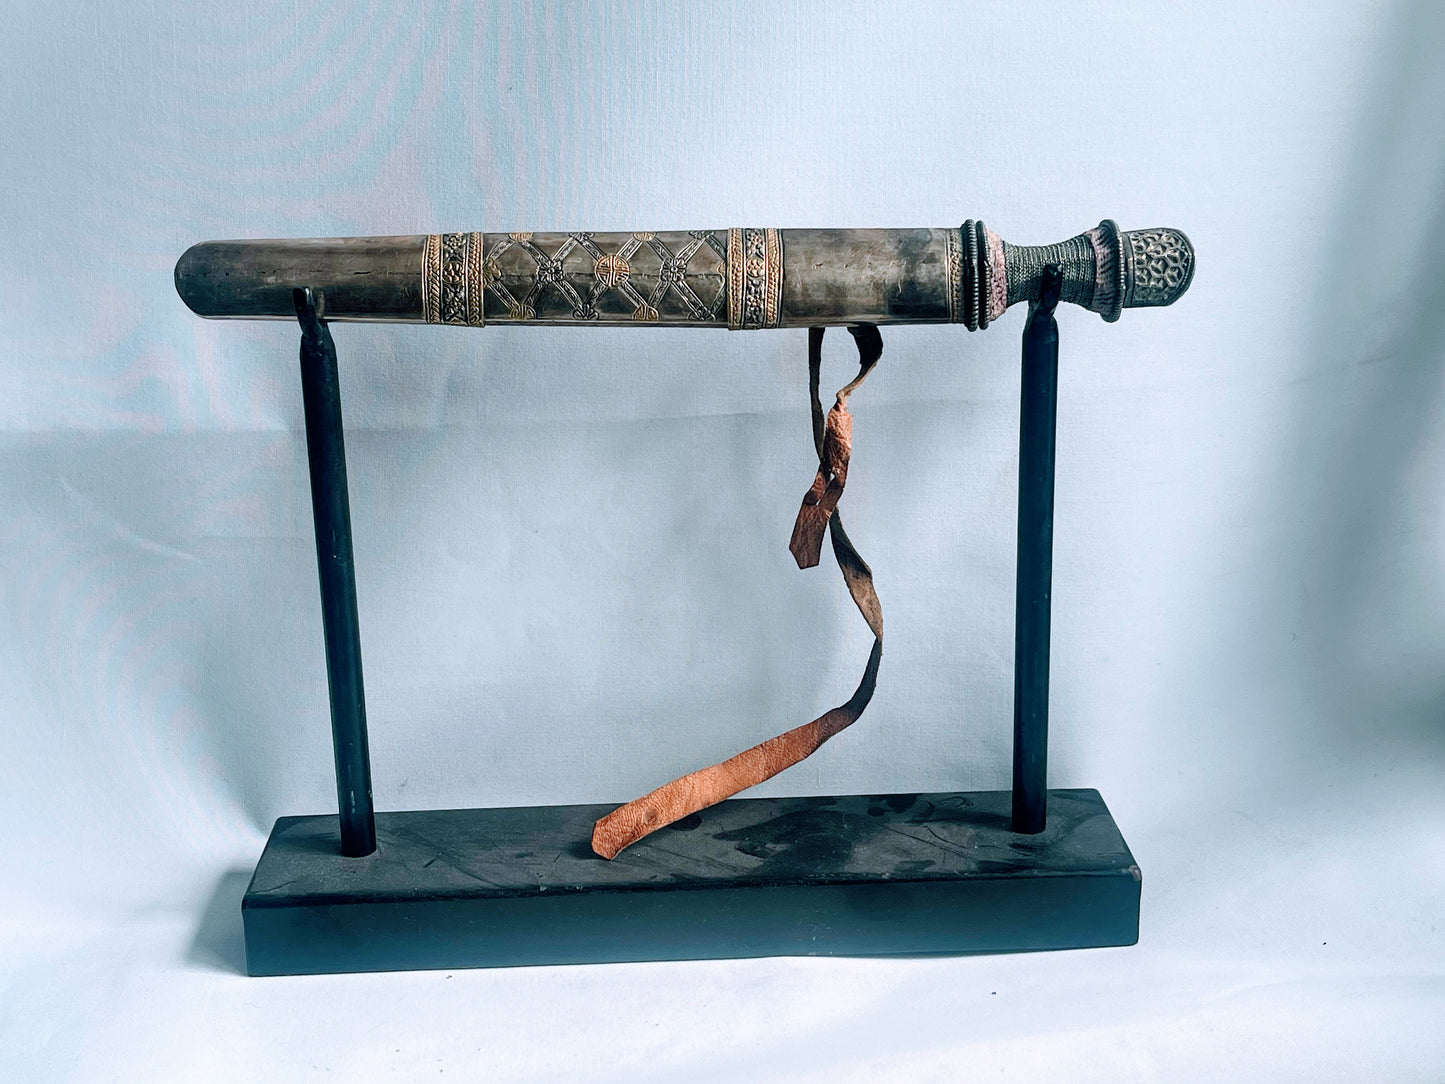 An antique Bhutanese dozum - dagger with a carved silver sheath